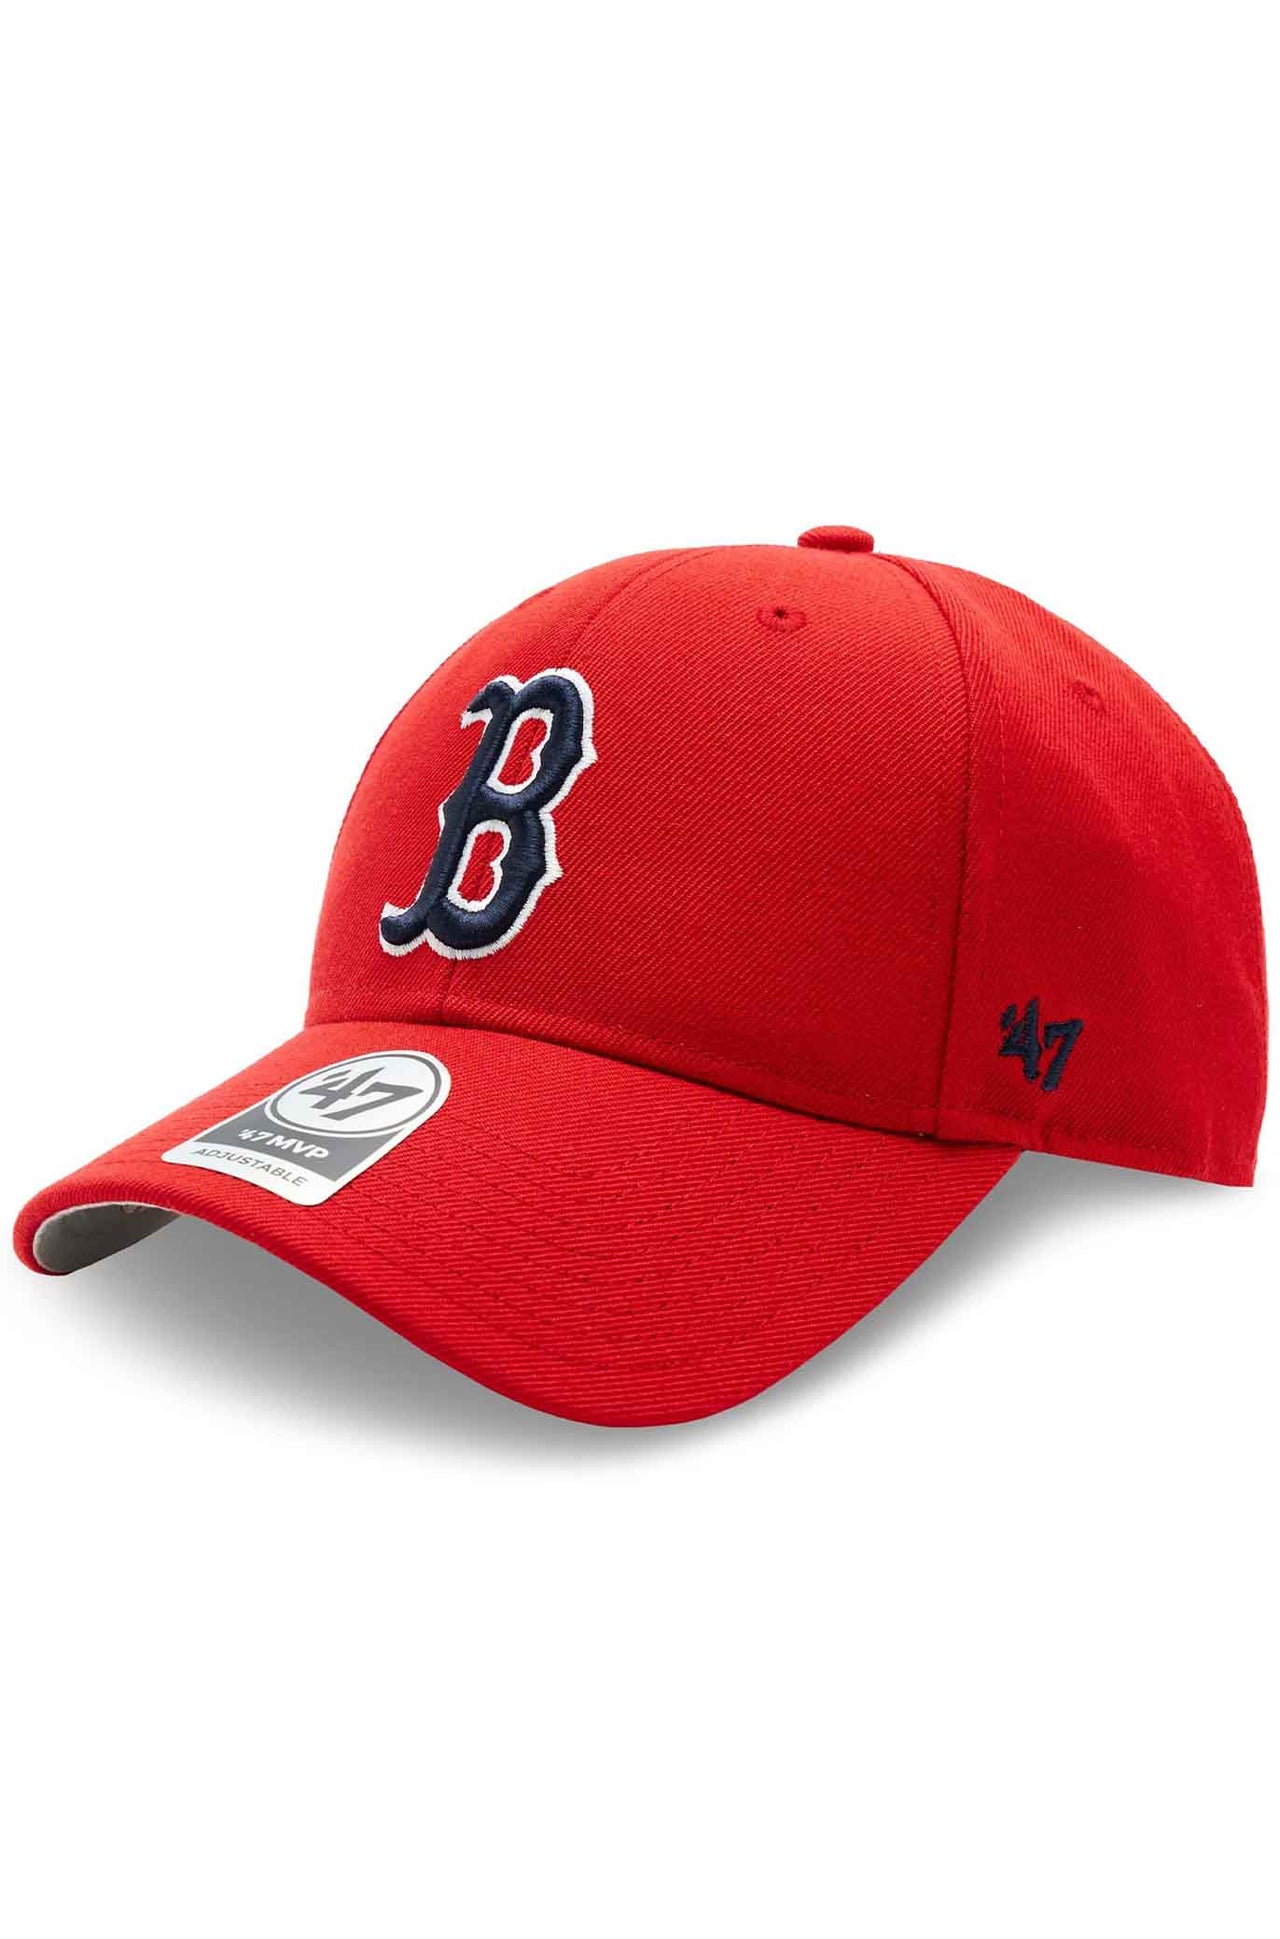 Gorra 47 Boston Red Sox